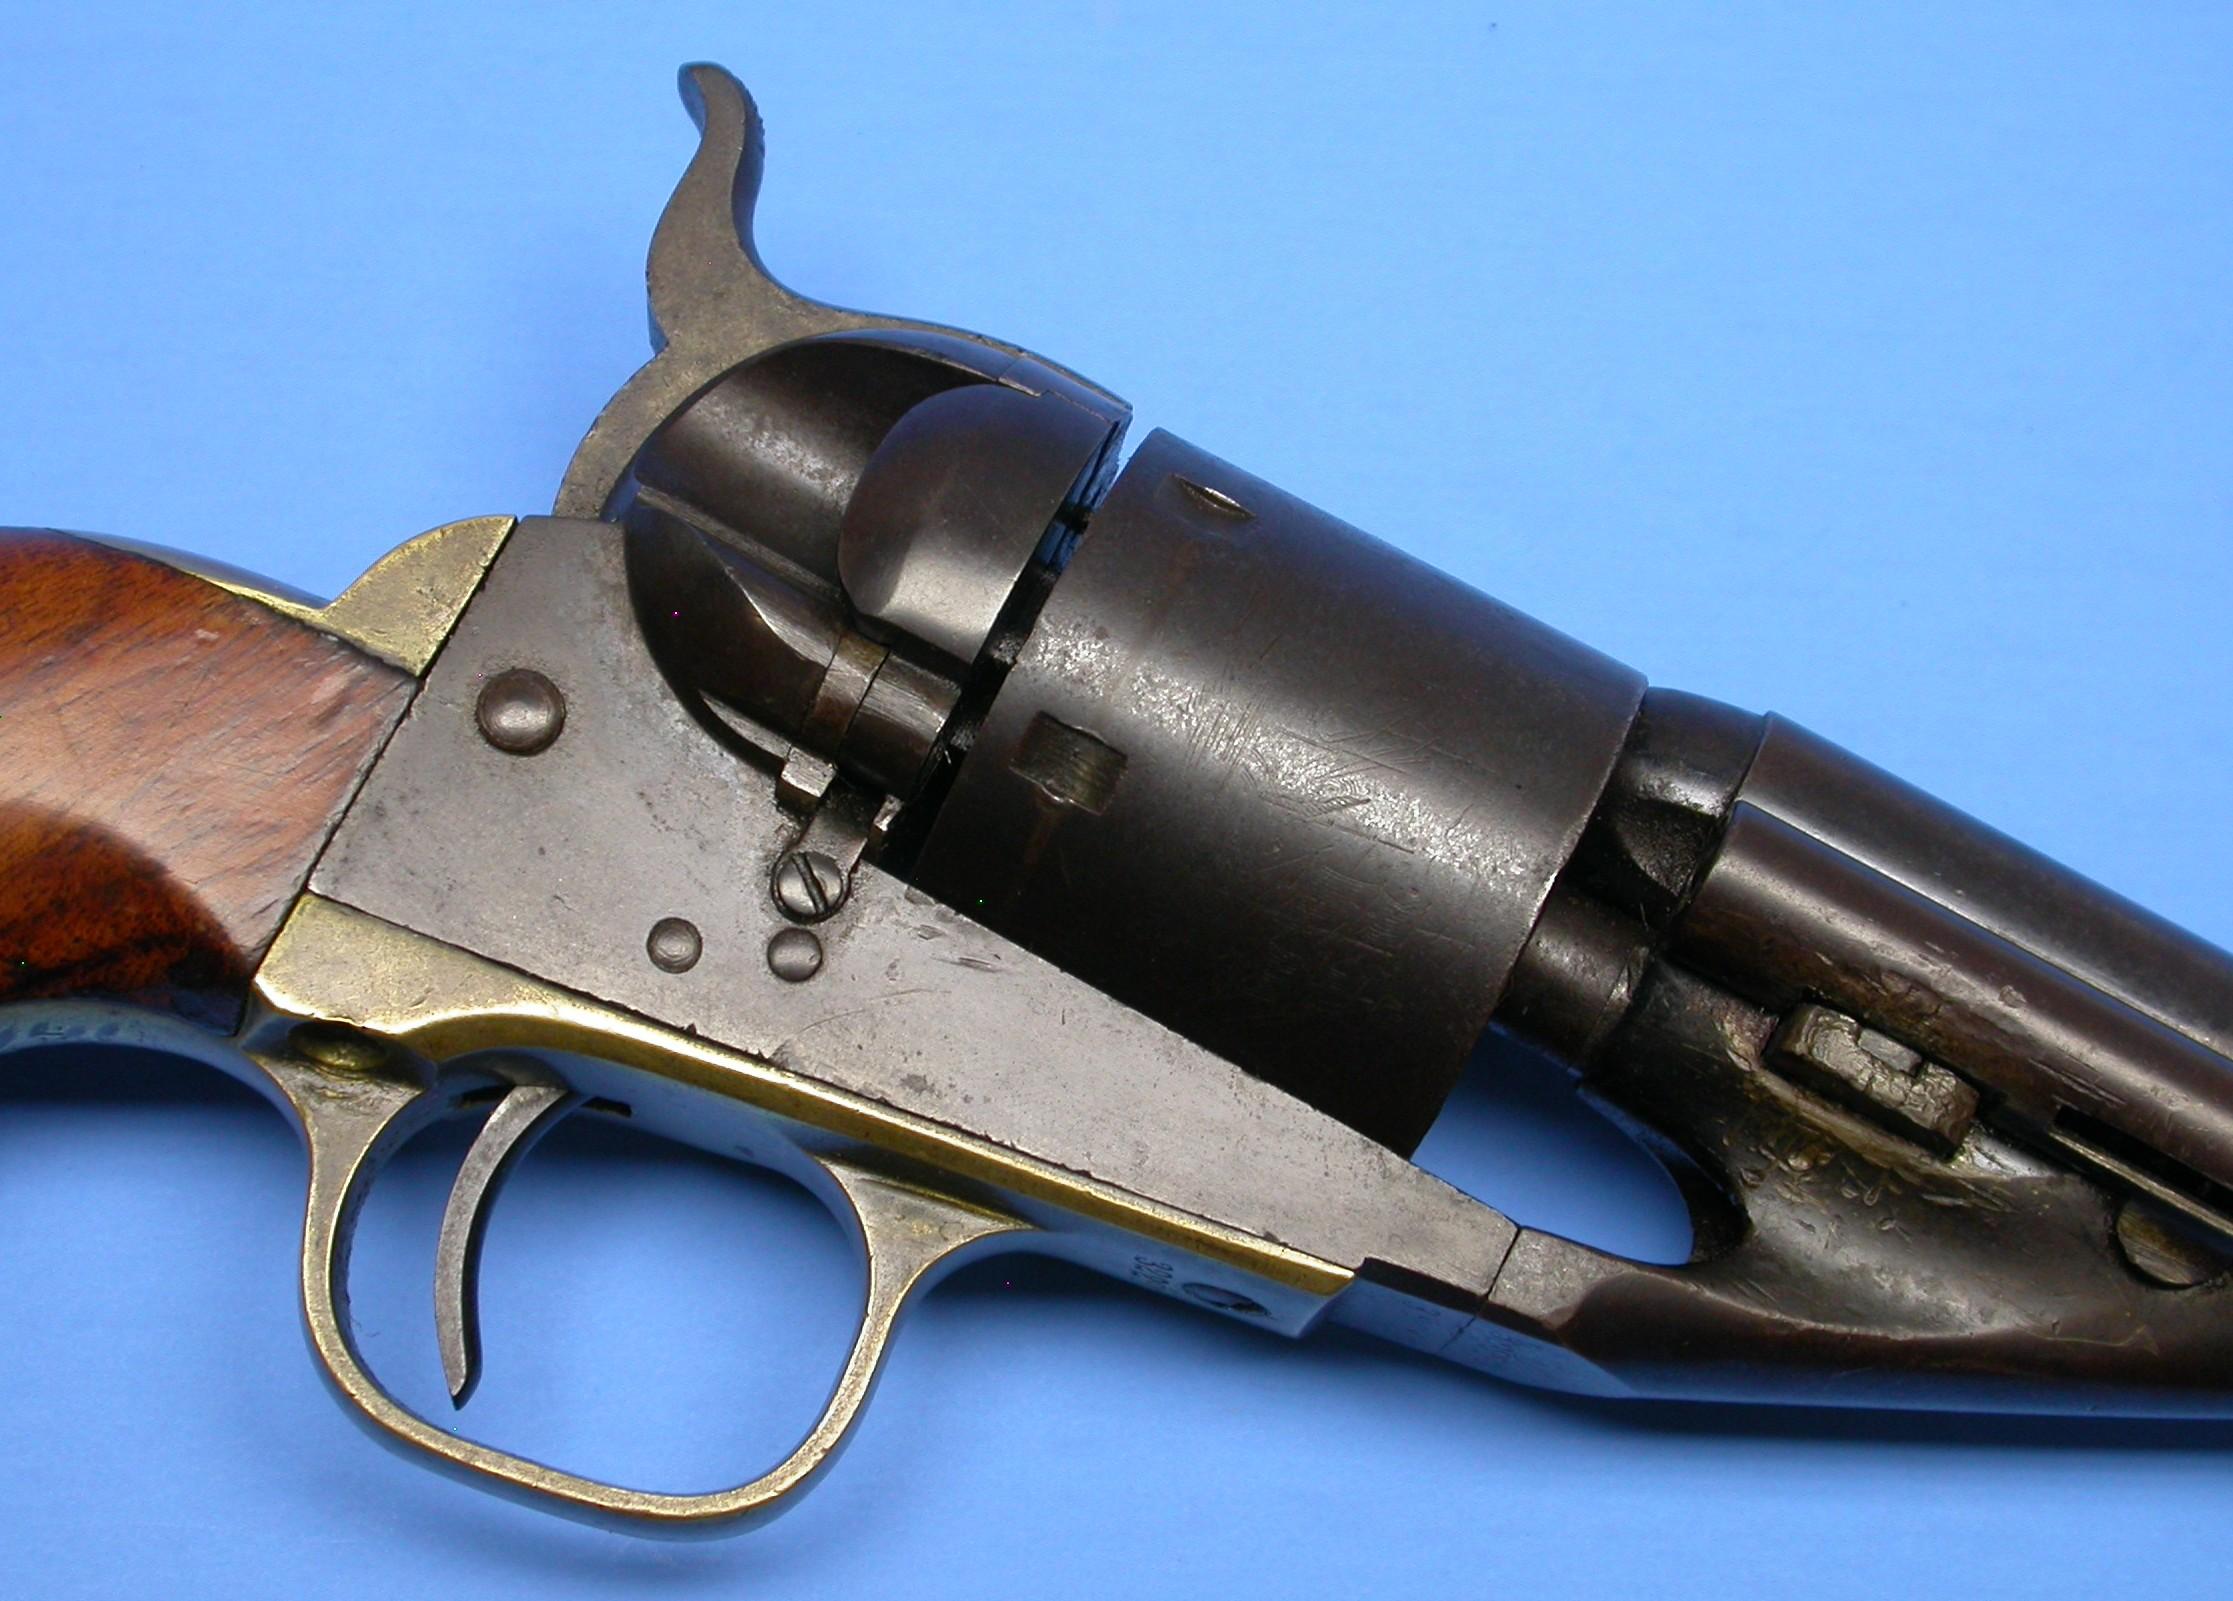 Colt M1860 .44 Caliber Richards Conversion Single-Action Revolver - Antique - no FFL needed (A1)